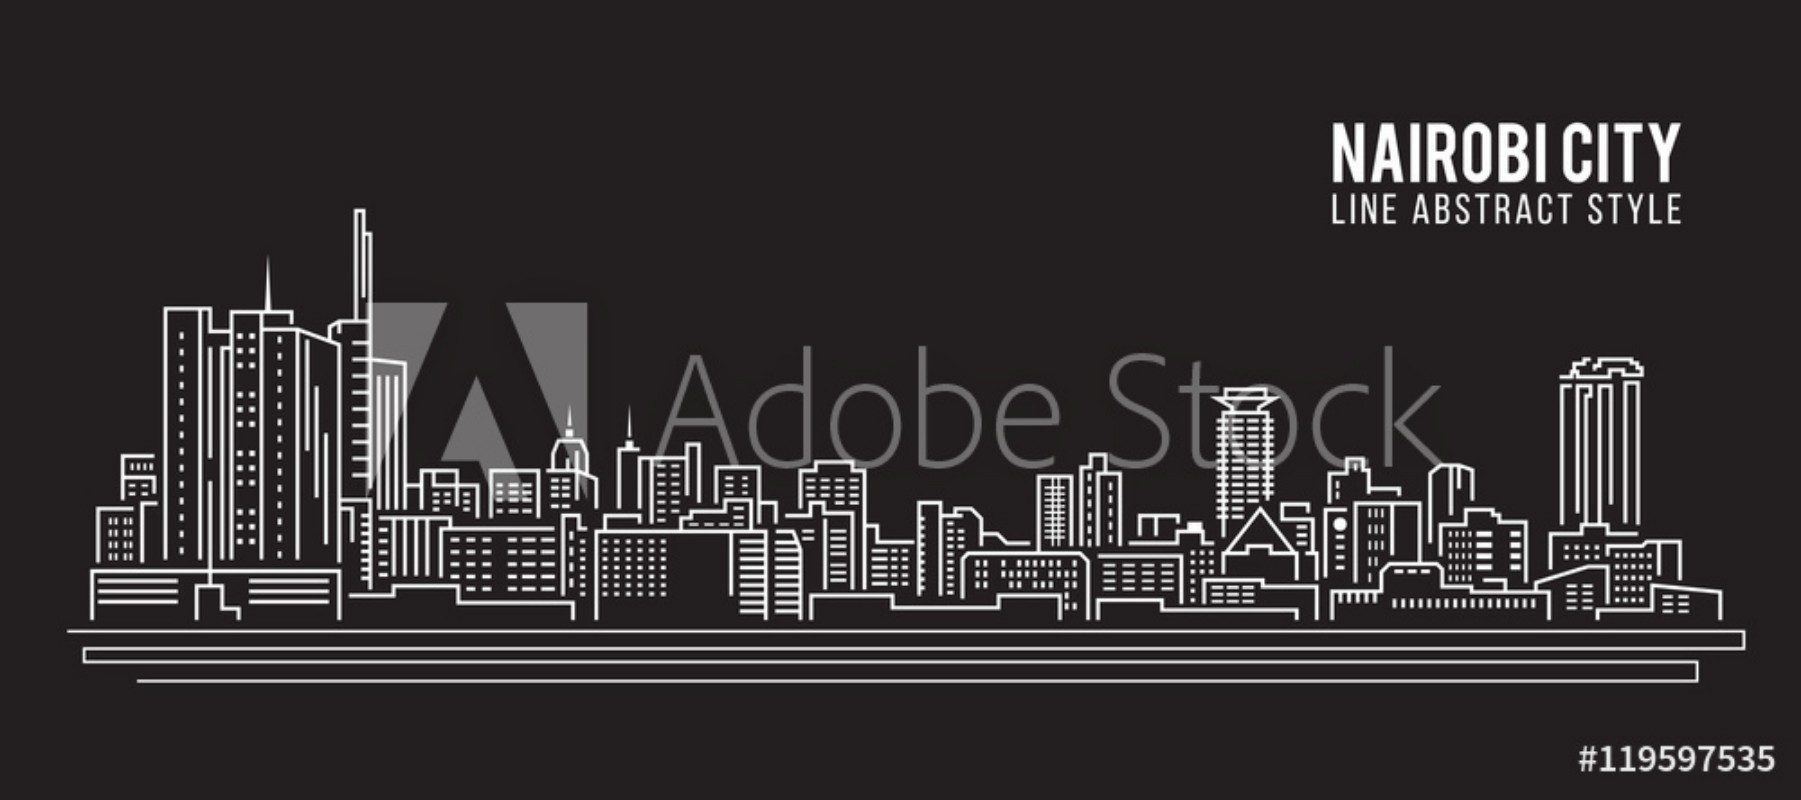 Afbeeldingen van Cityscape Building Line art Vector Illustration design - Nairobi city